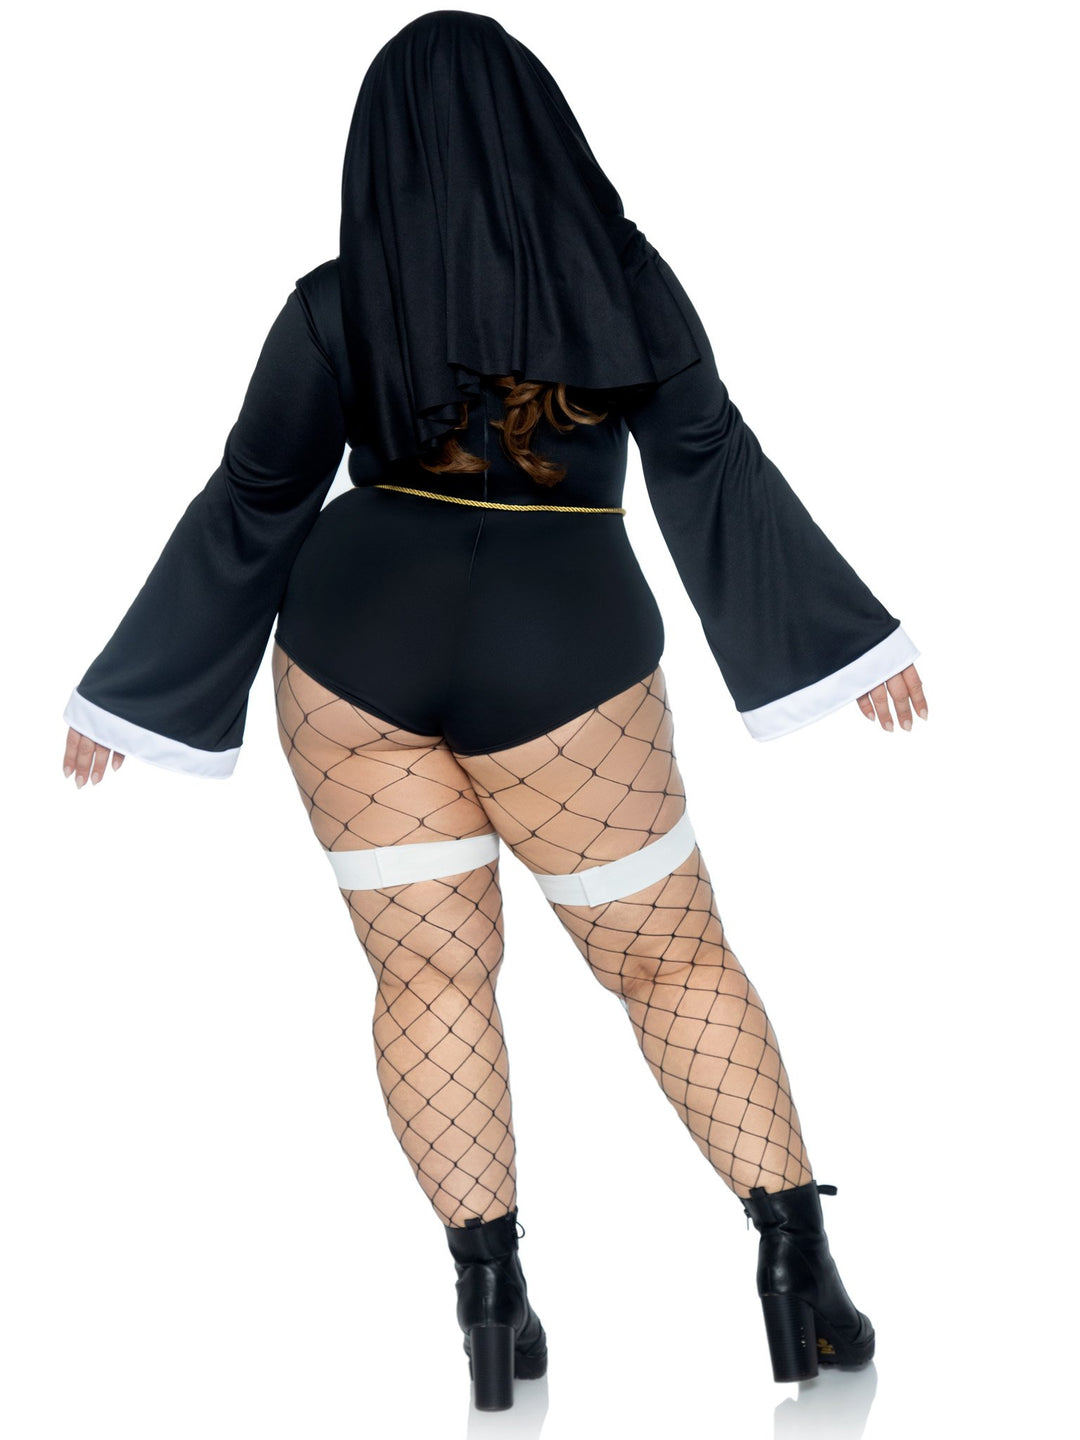 Sister Sin Nun Bell Sleeve Plus Bodysuit with Garter Leg Straps and Hat Headband